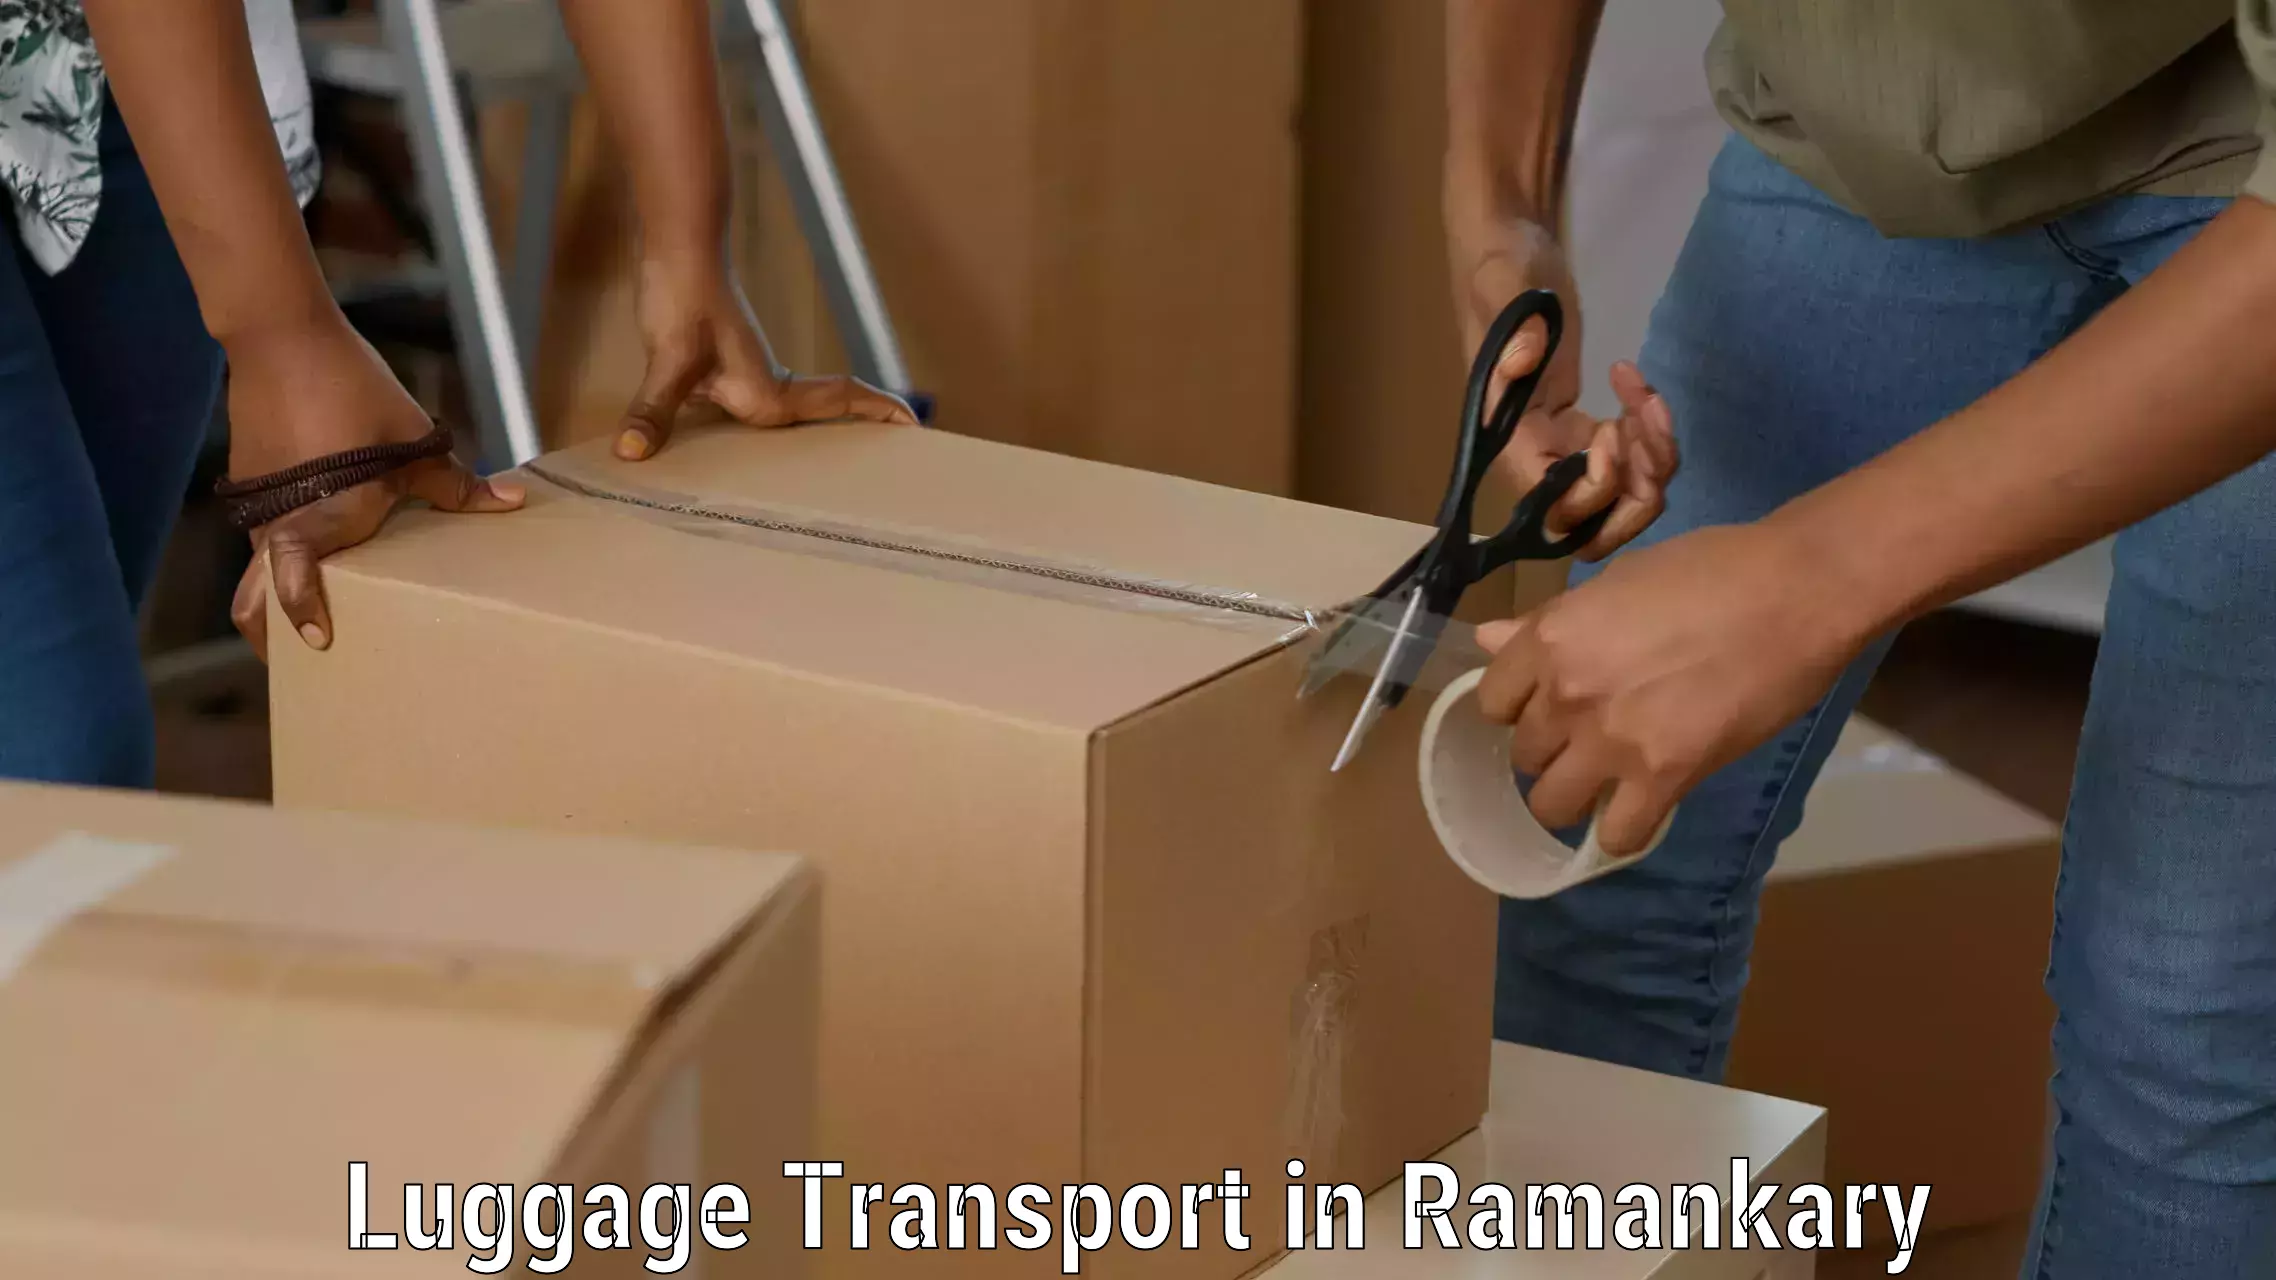 Luggage shipment strategy in Ramankary